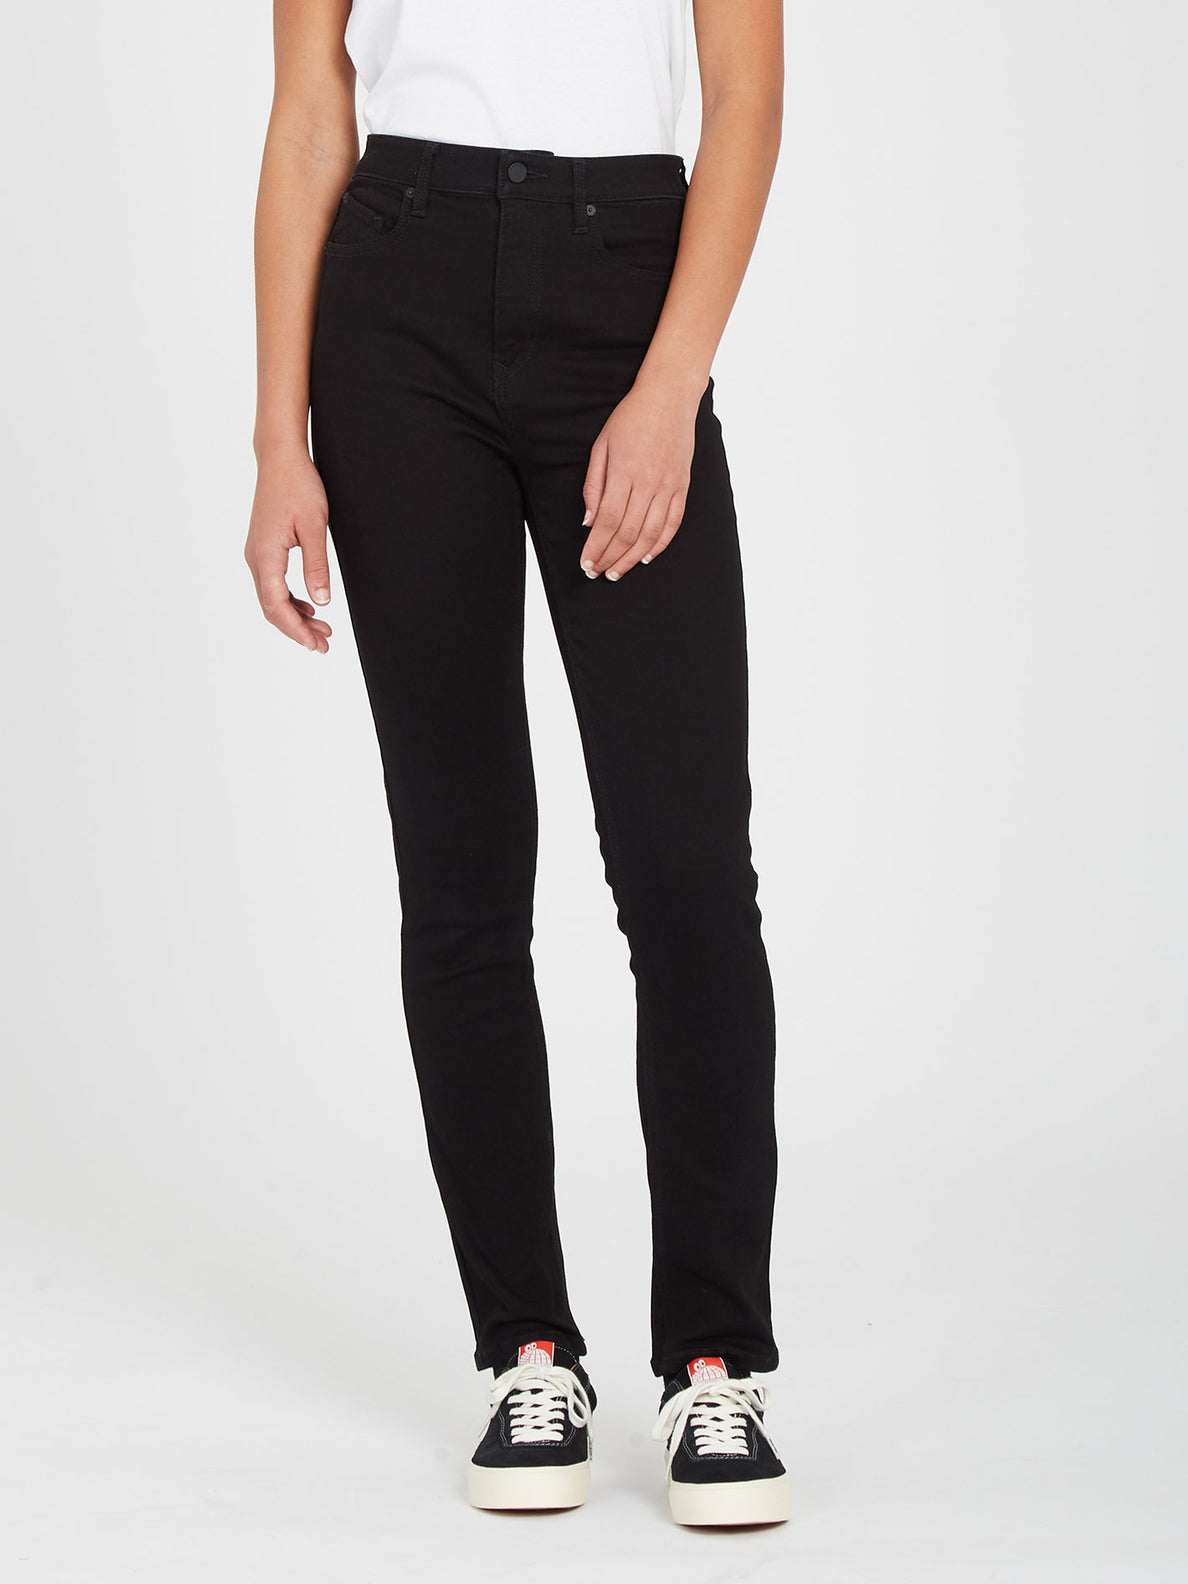 Vitabilly Jeans - VINTAGE BLACK (B1912300_VBK) [F]